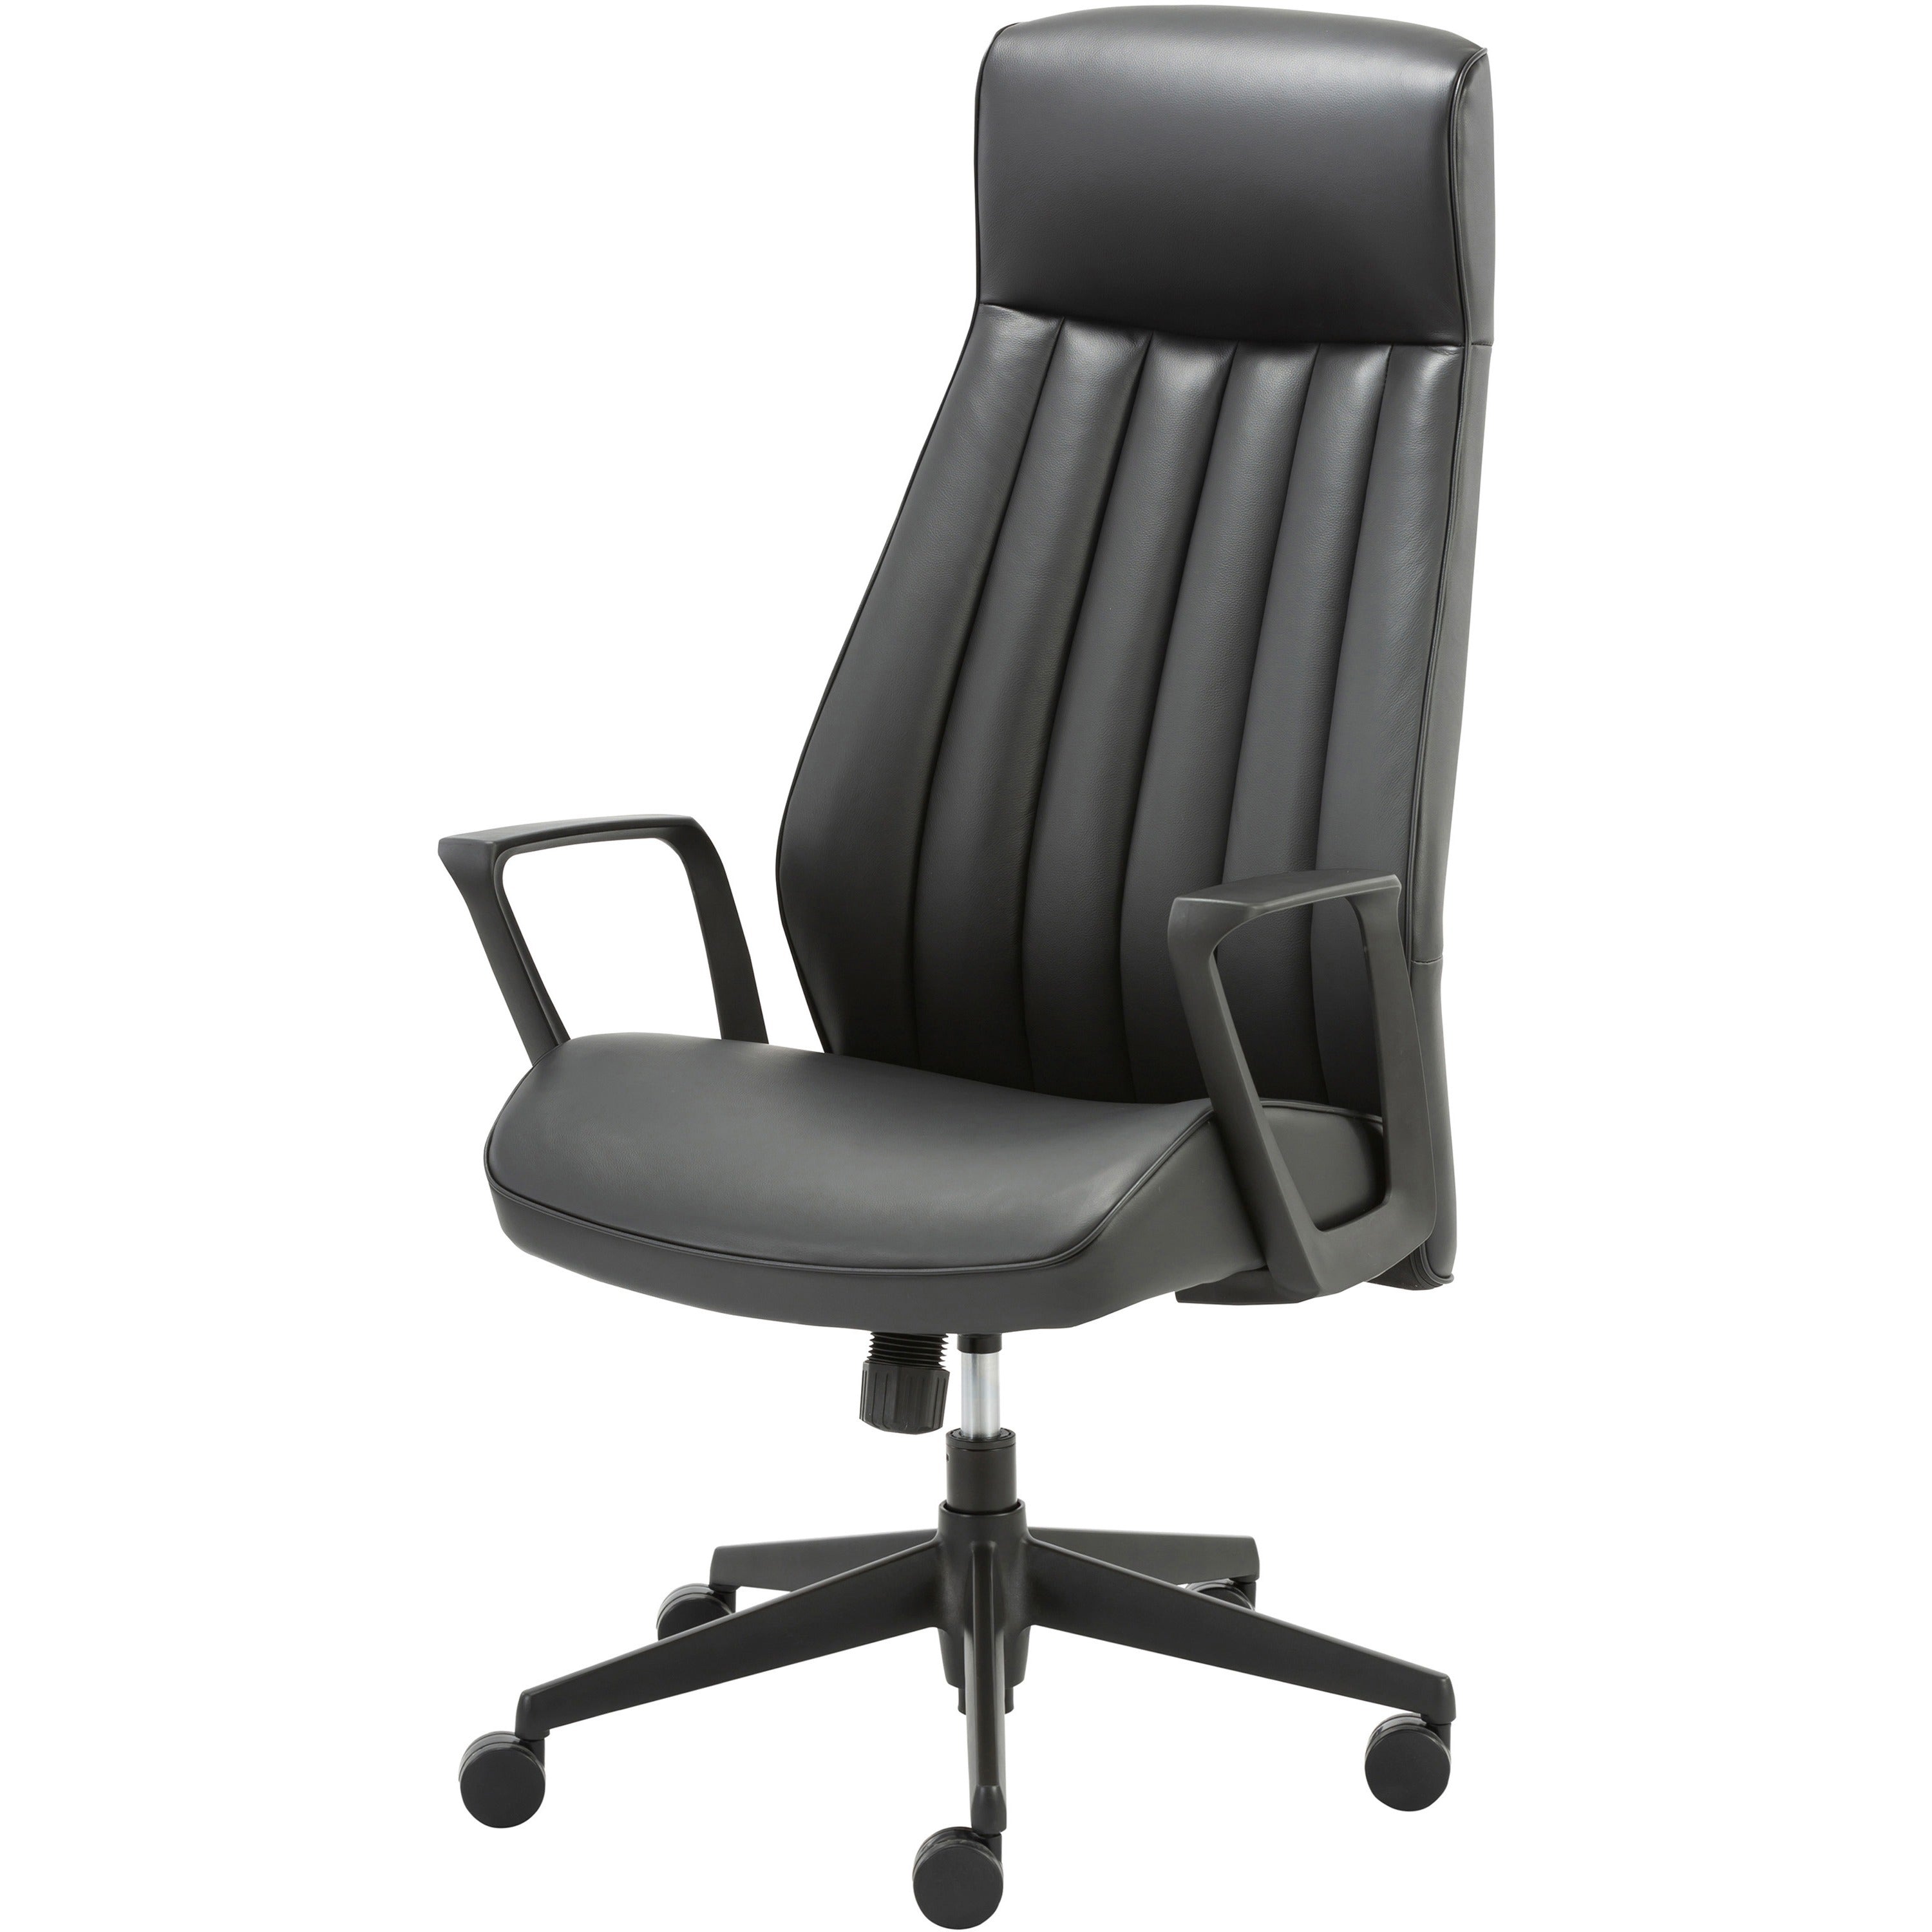 lys-high-back-bonded-leather-chair-black-bonded-leather-seat-black-bonded-leather-back-high-back-armrest-1-each_lysch100labk - 4